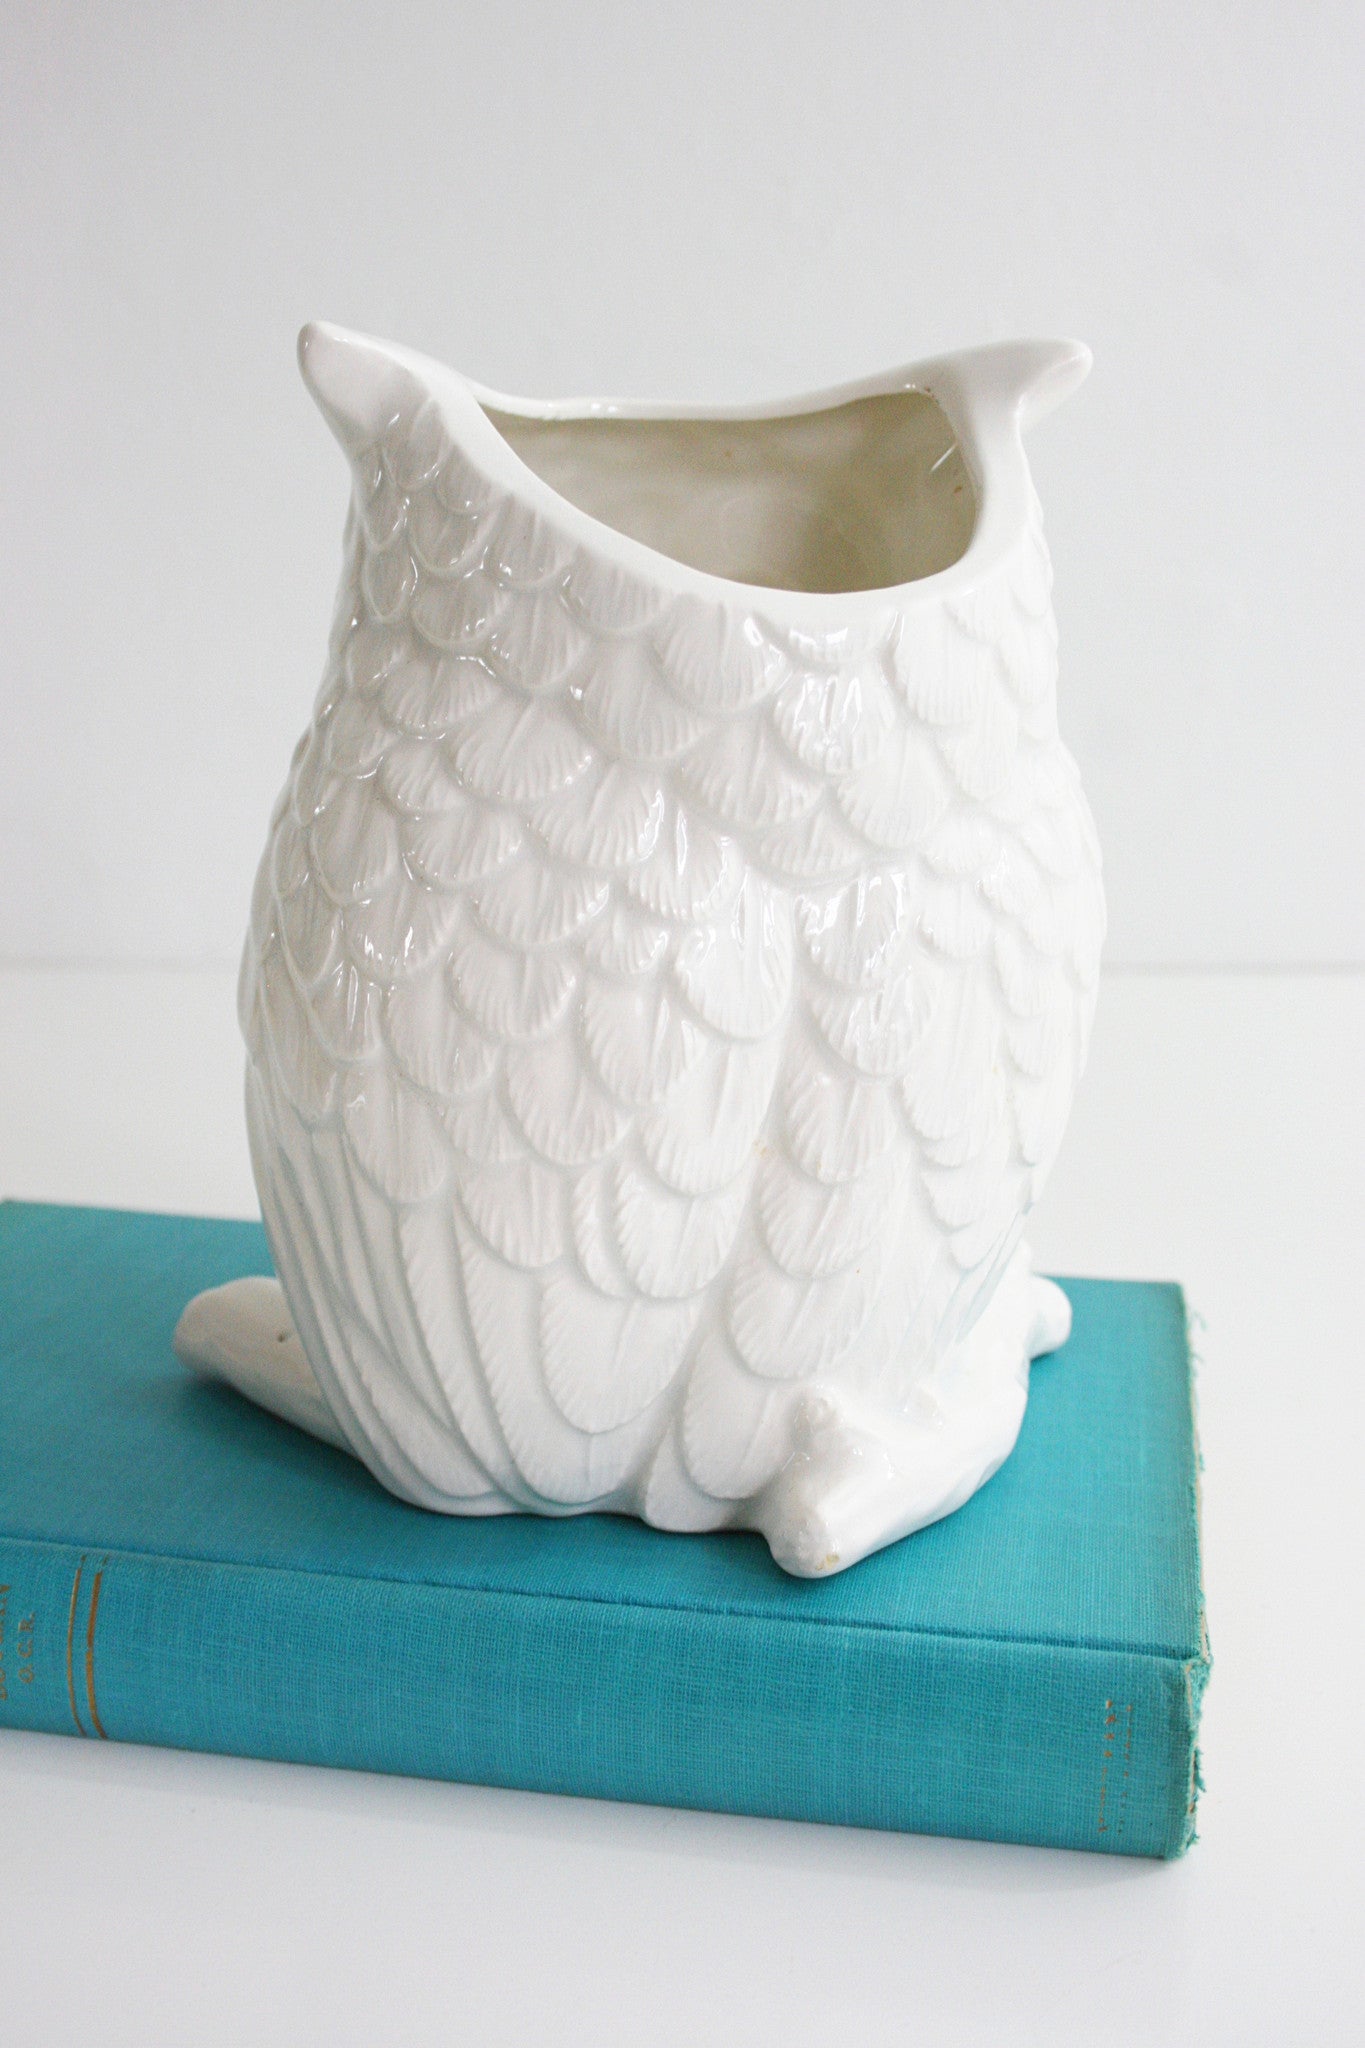 SOLD - Mid Century Napcoware White Owl Planter